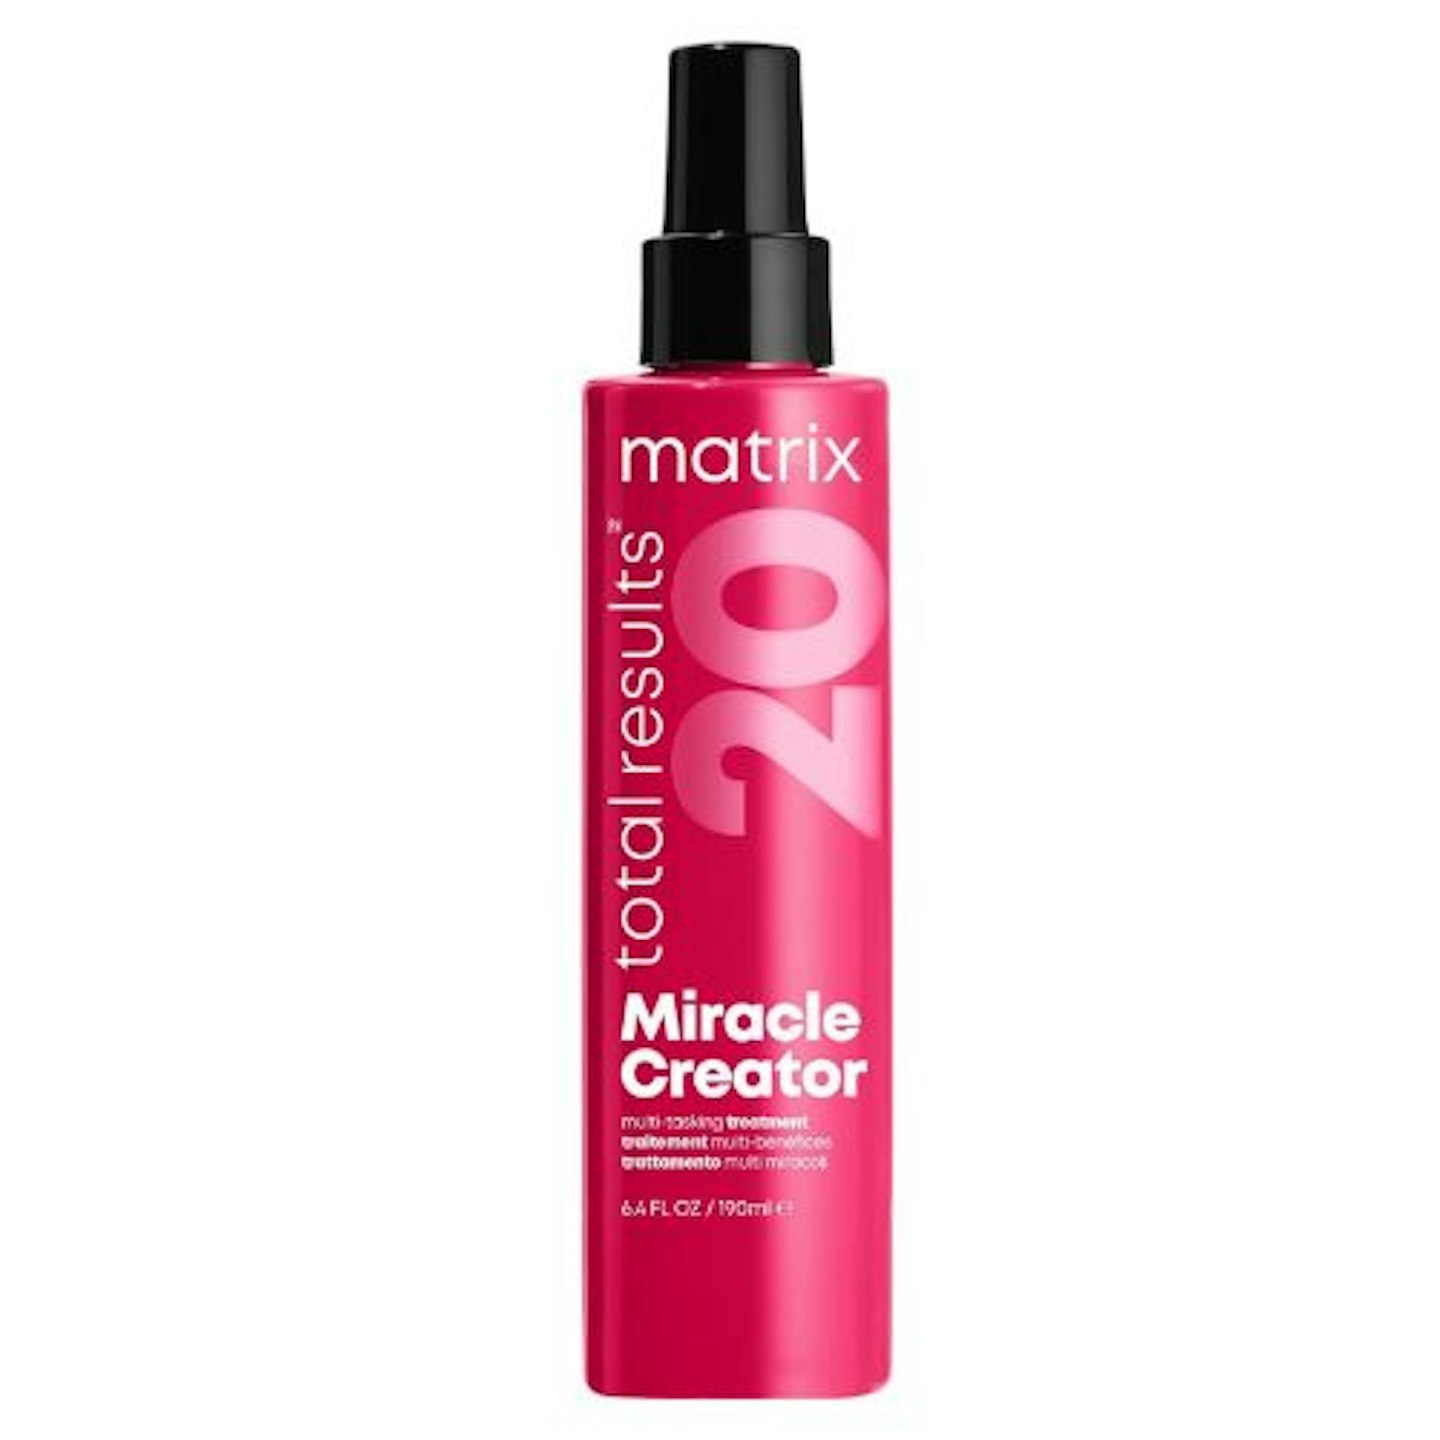 Matrix Multi-Tasking Hair Treatment Leave-In Conditioner